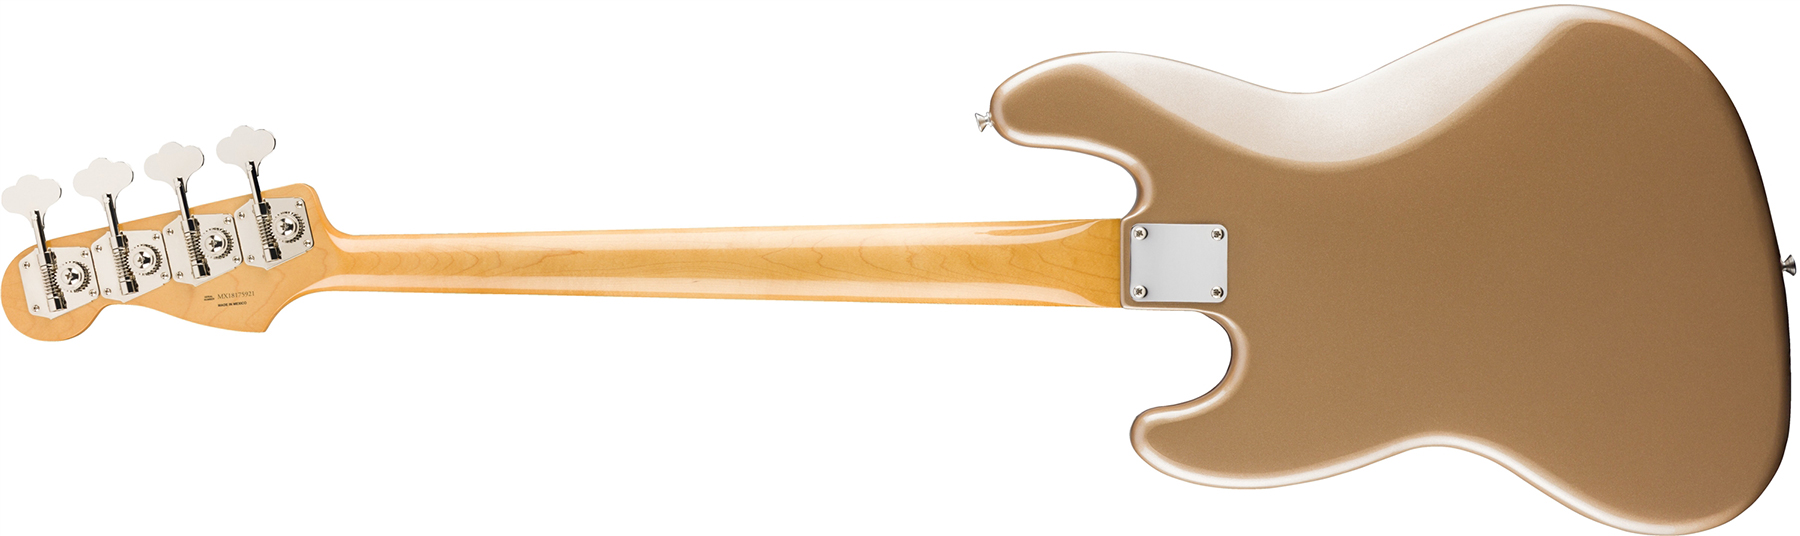 Fender Jazz Bass 60s Vintera Vintage Mex Pf - Firemist Gold - Basse Électrique Solid Body - Variation 1